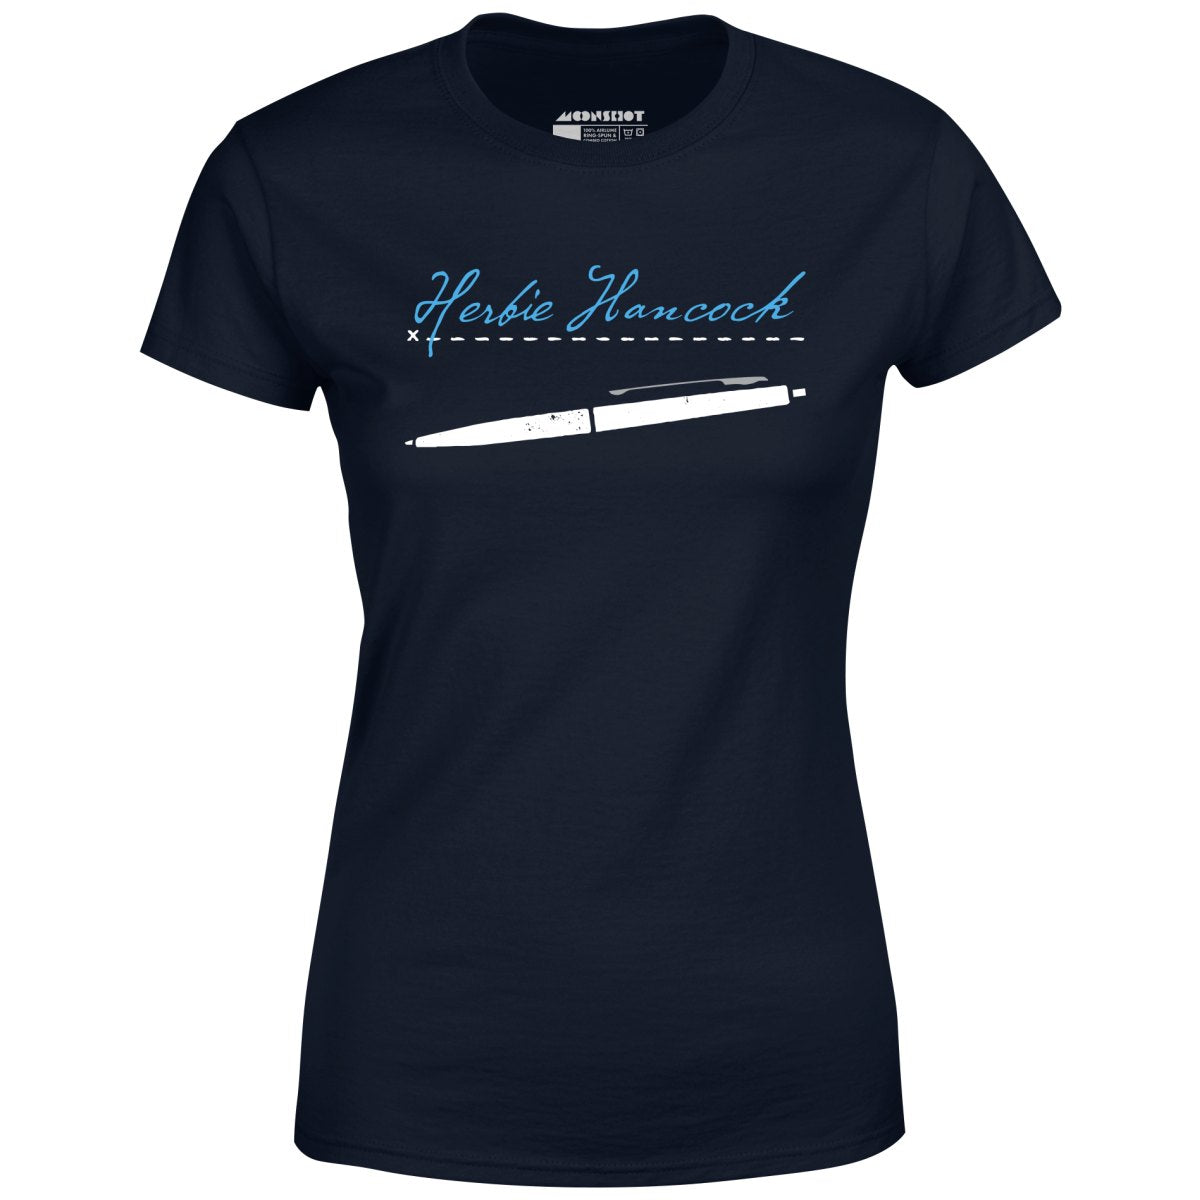 It's Herbie Hancock - Women's T-Shirt